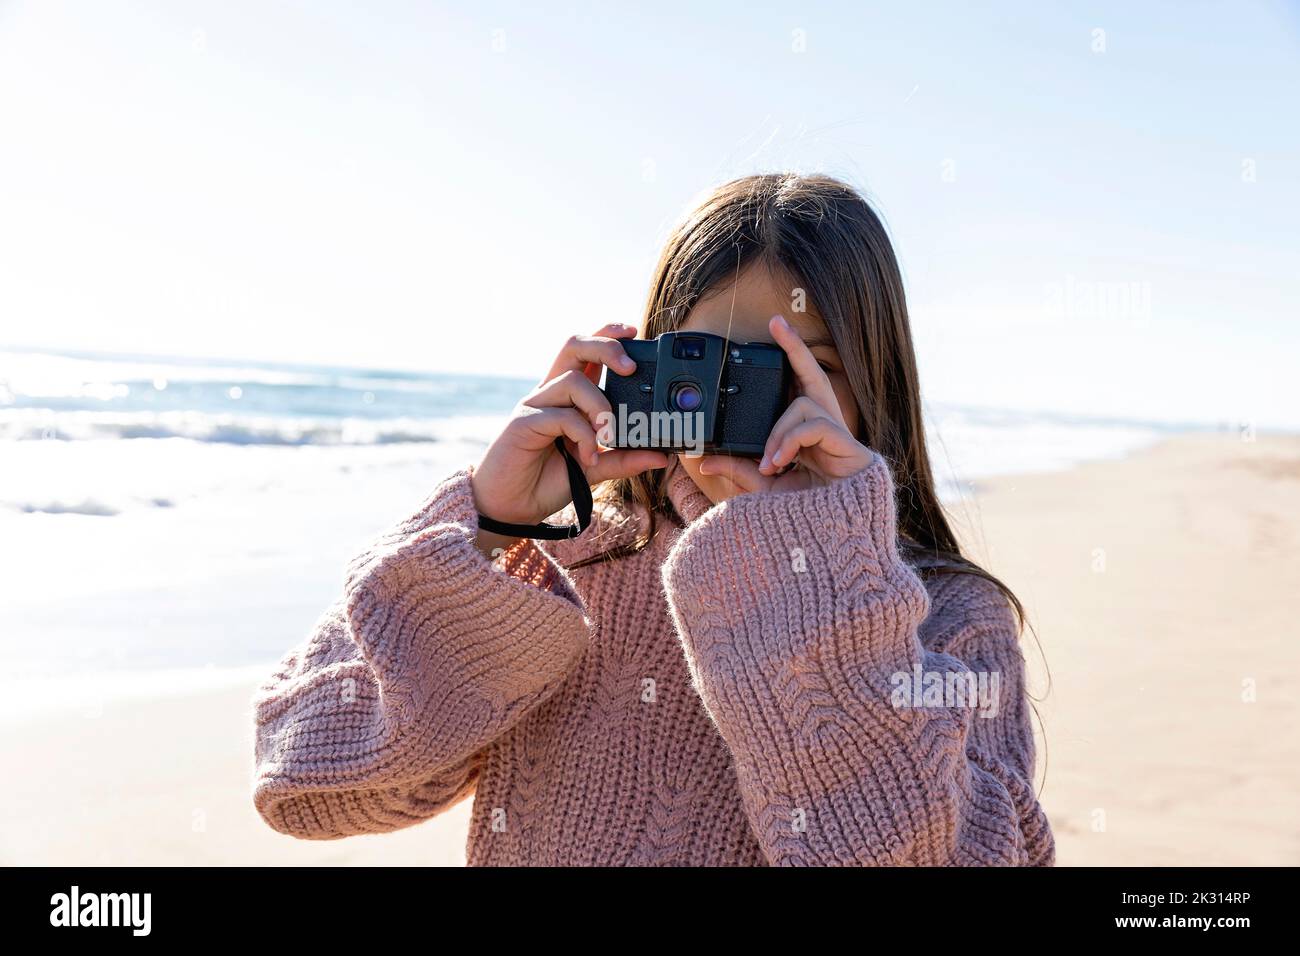 Girl with camera taking photos at beach Stock Photo